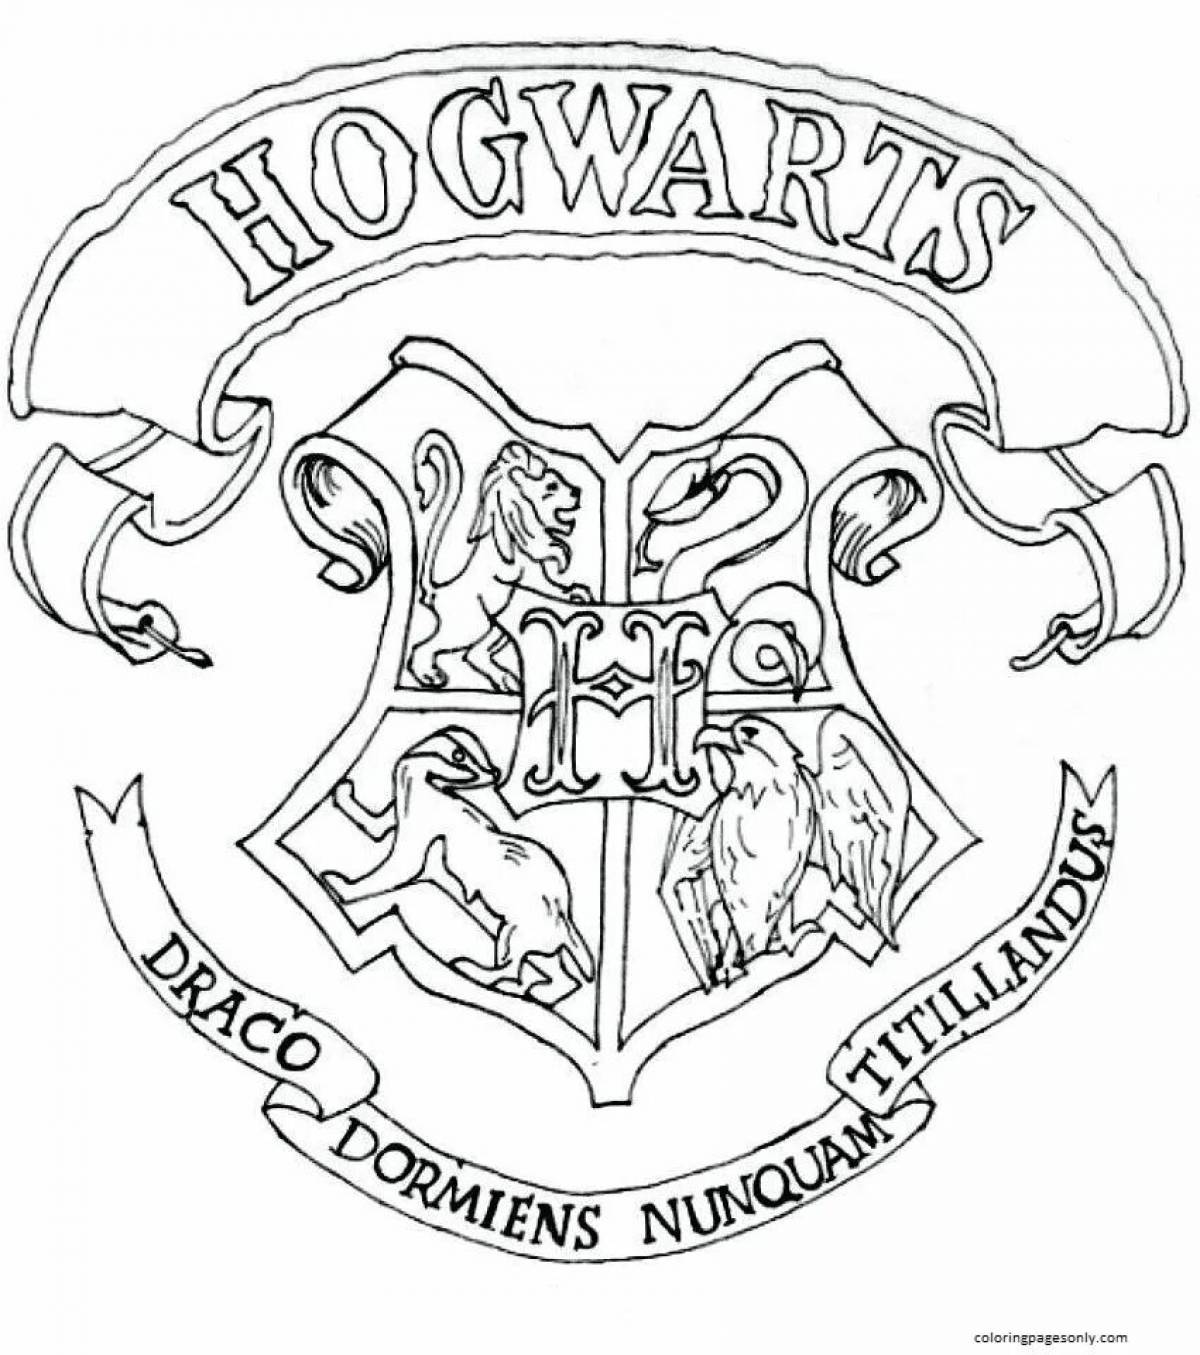 Hogwarts coat of arms #11